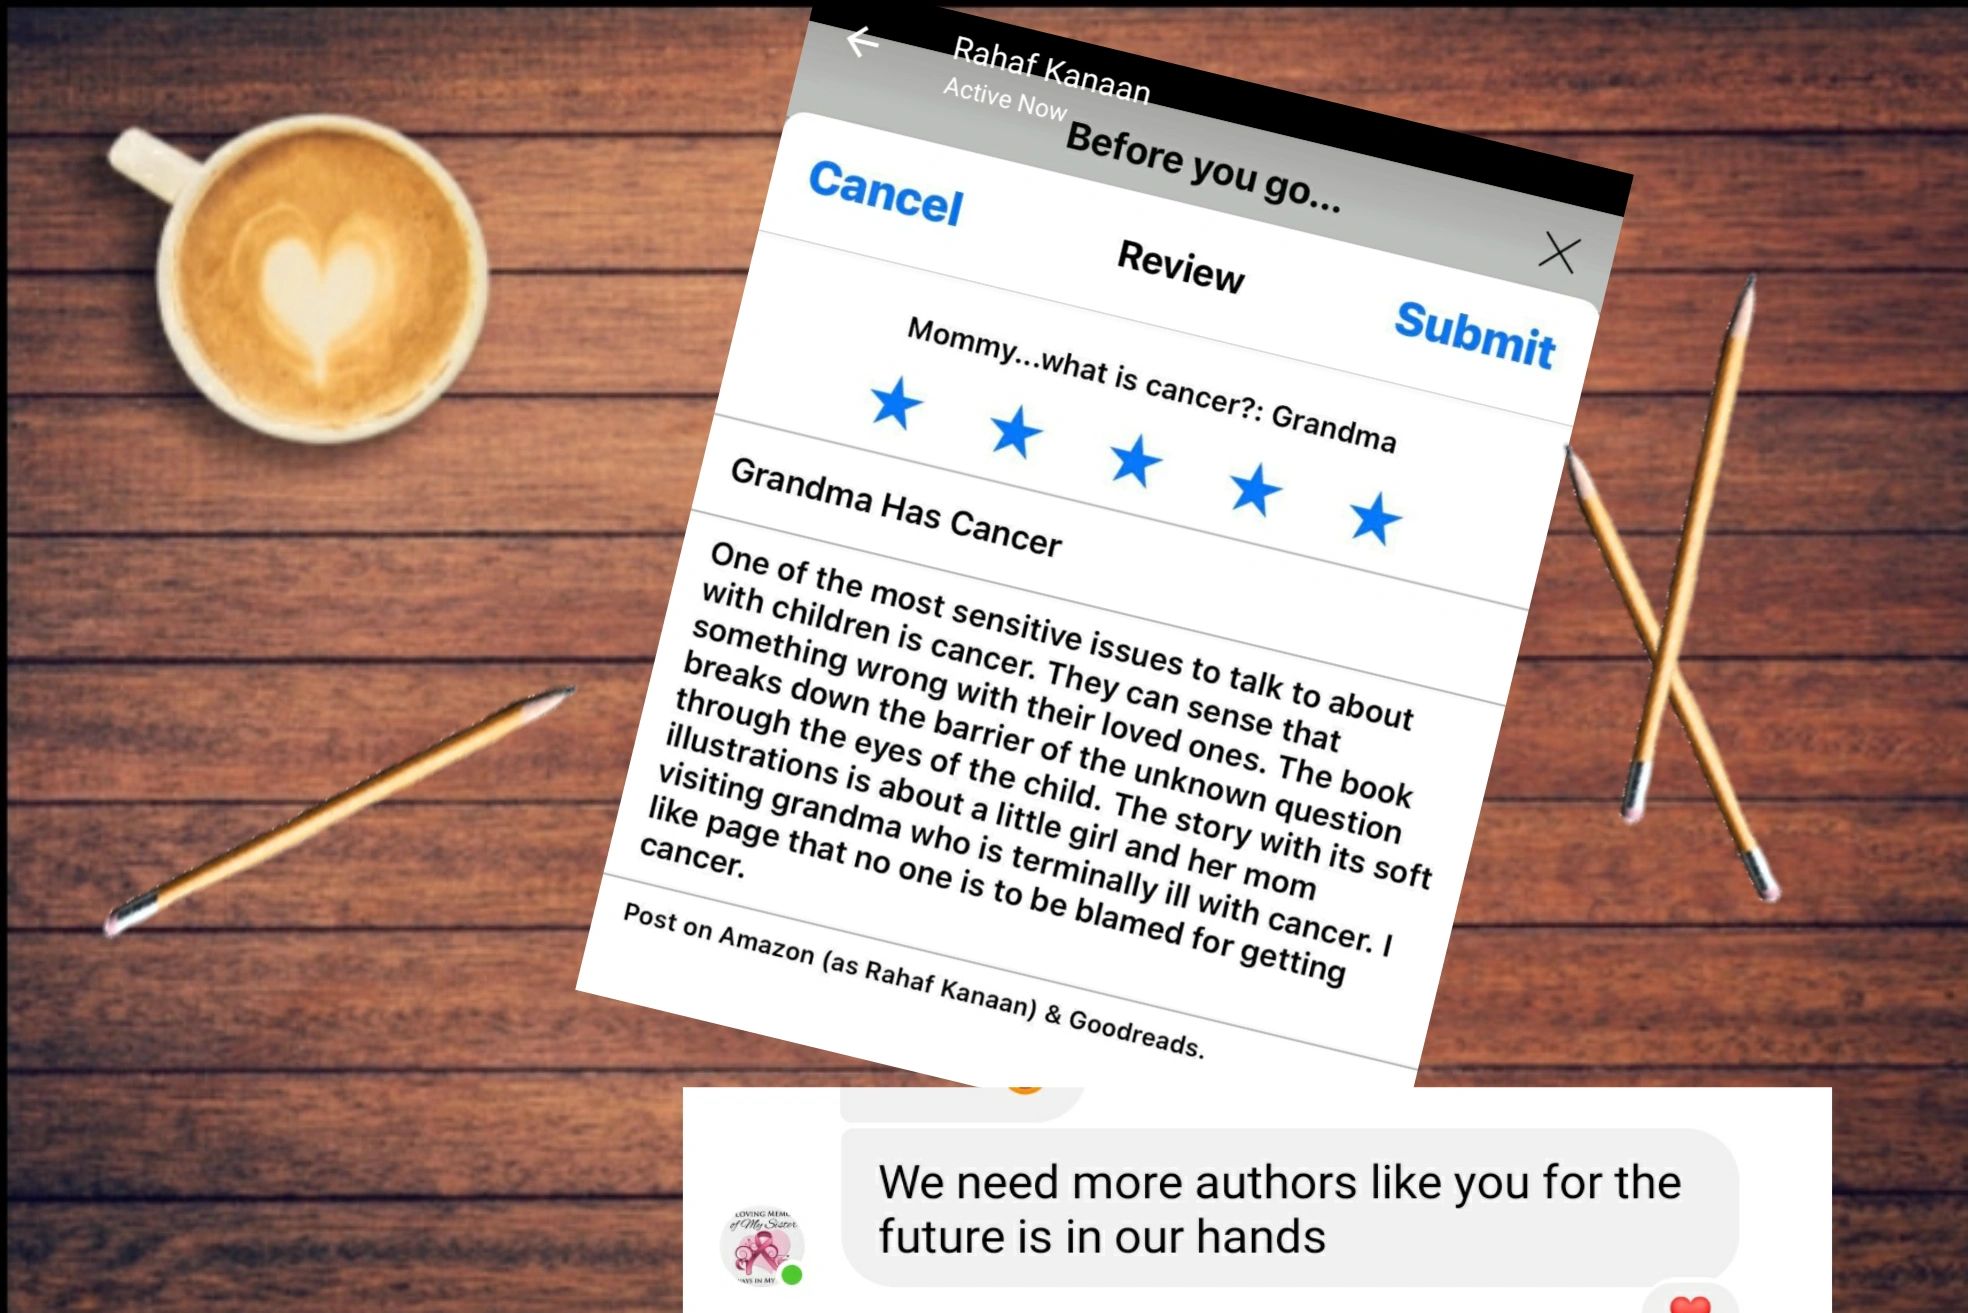 5-star Goodreads review.
#author #writer #childrensbooks #kids #kidsbook #onlinestories #onlinebooks